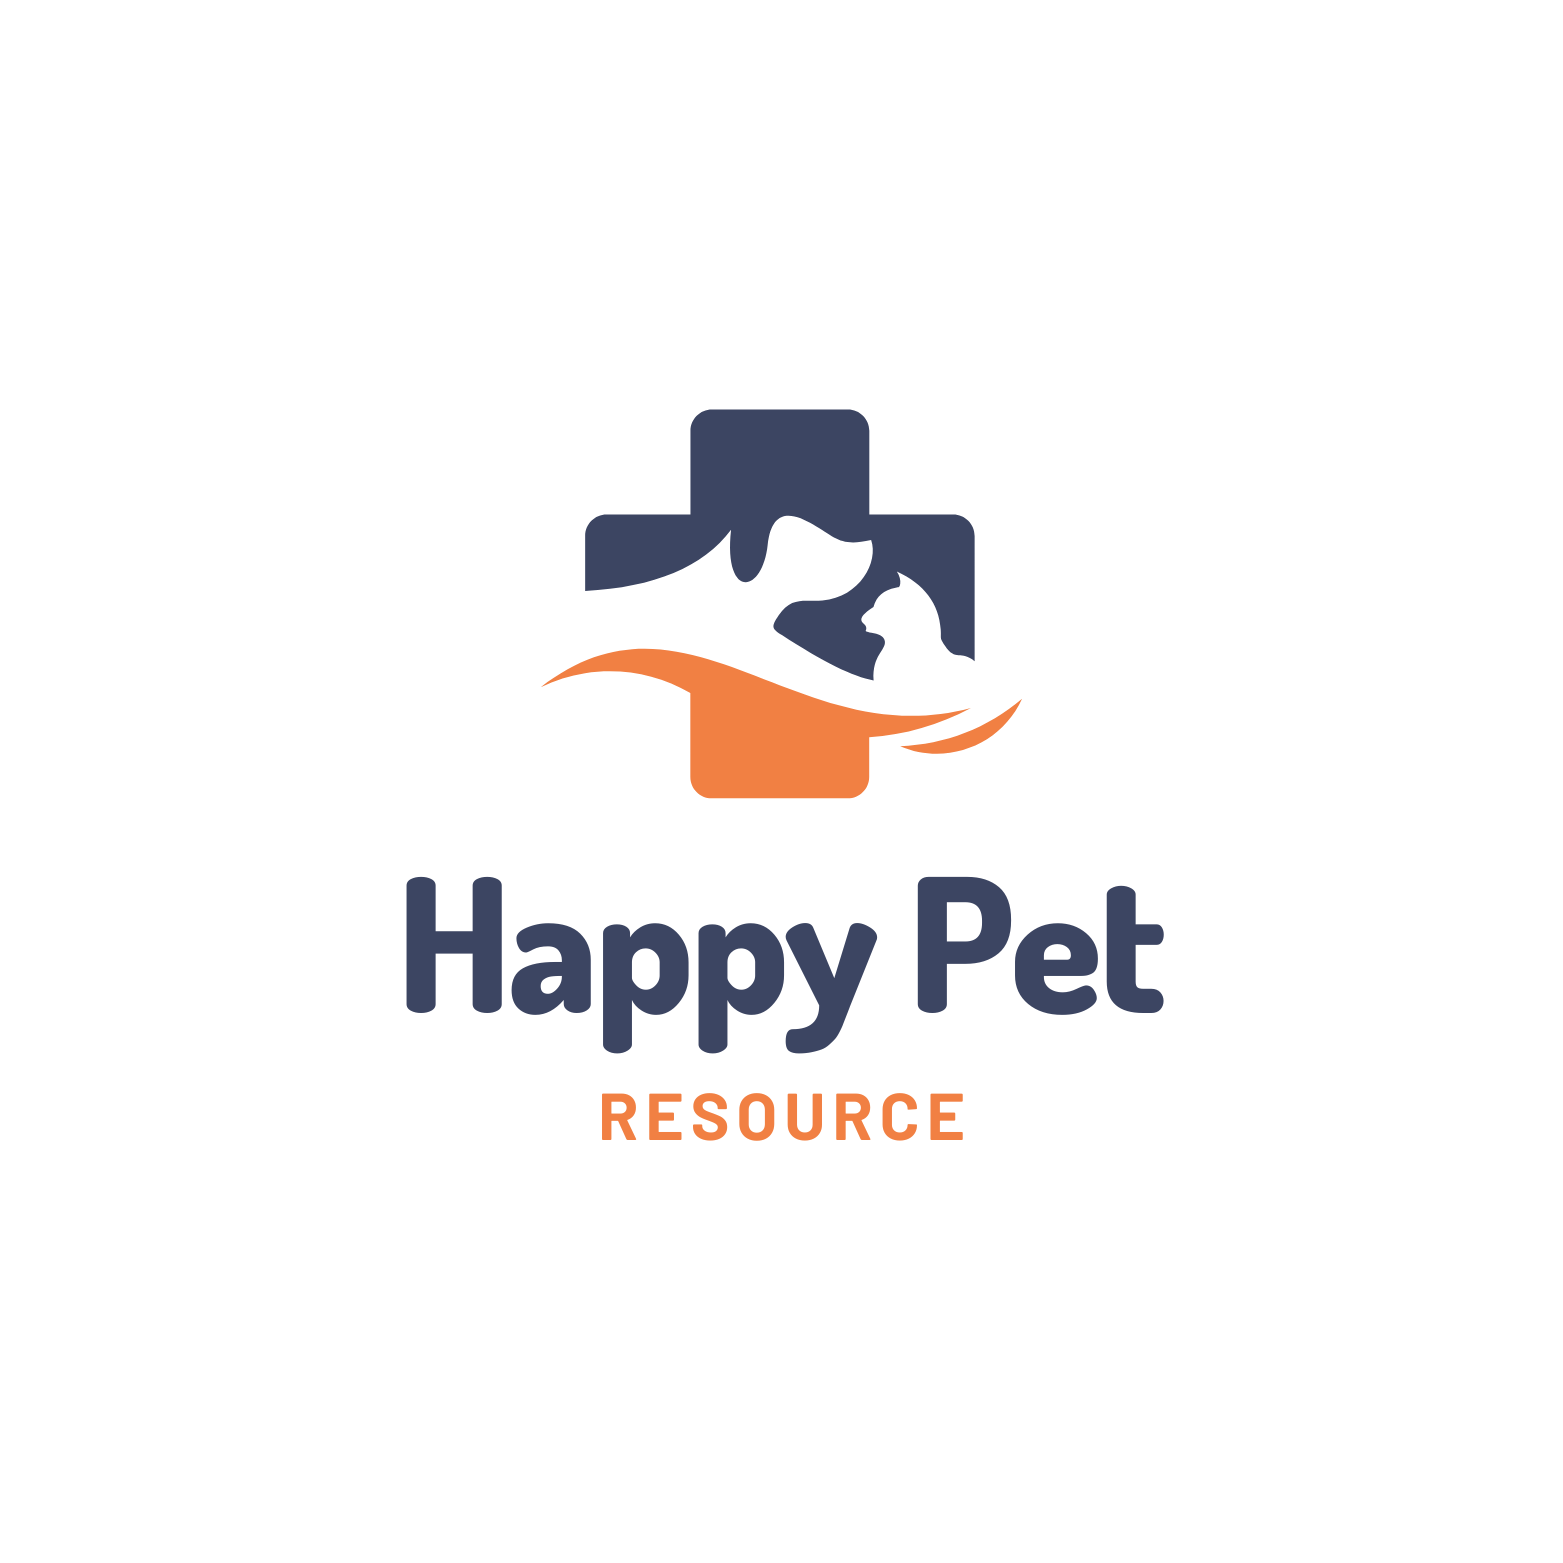 Happy Pet Resource